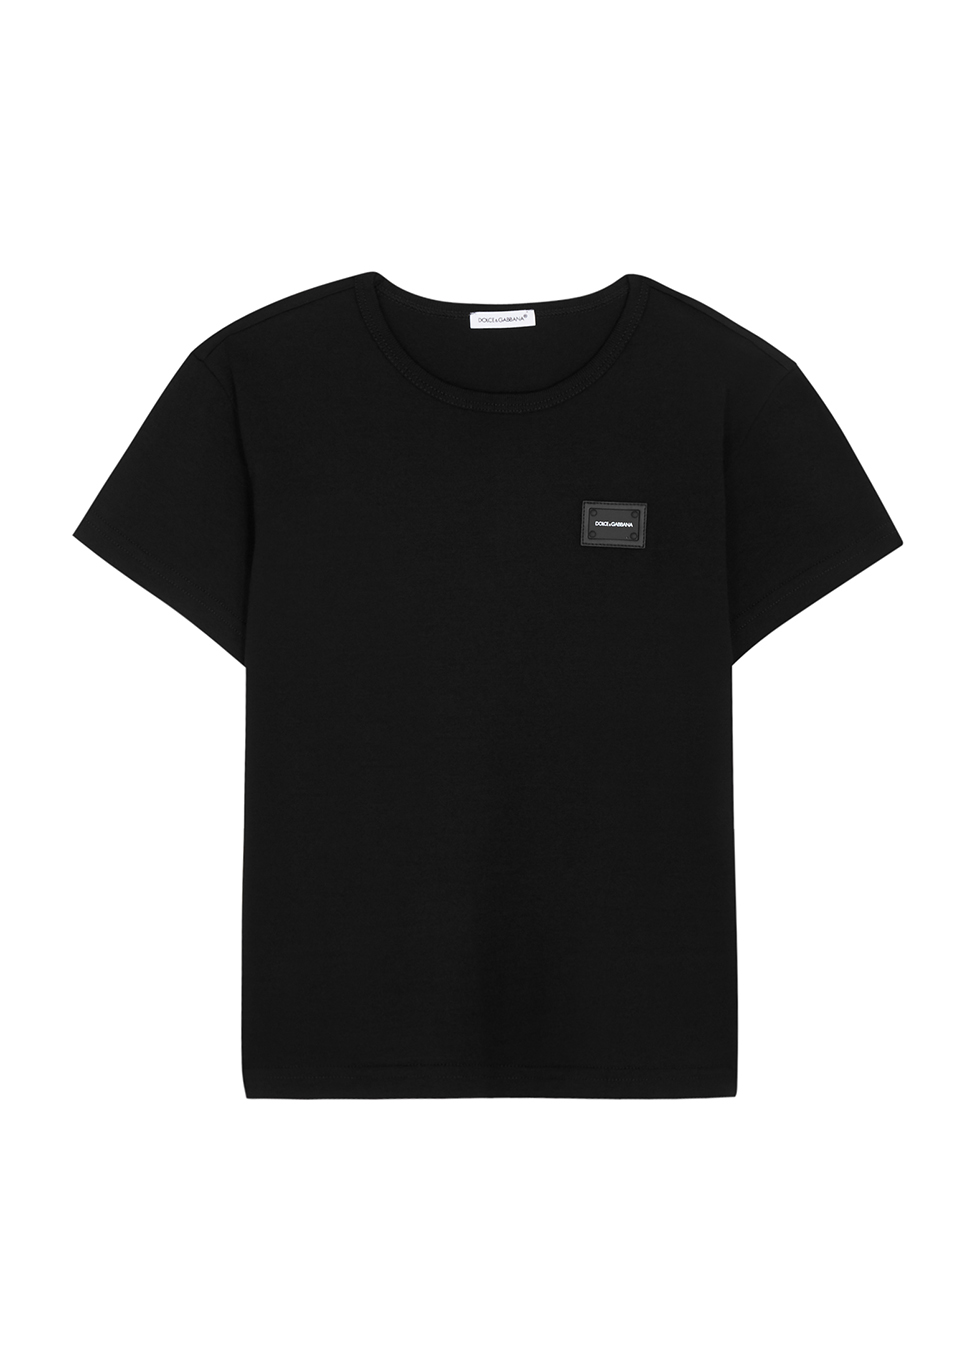 Dolce & Gabbana KIDS Black logo cotton T-shirt (2-6 years) - Harvey Nichols